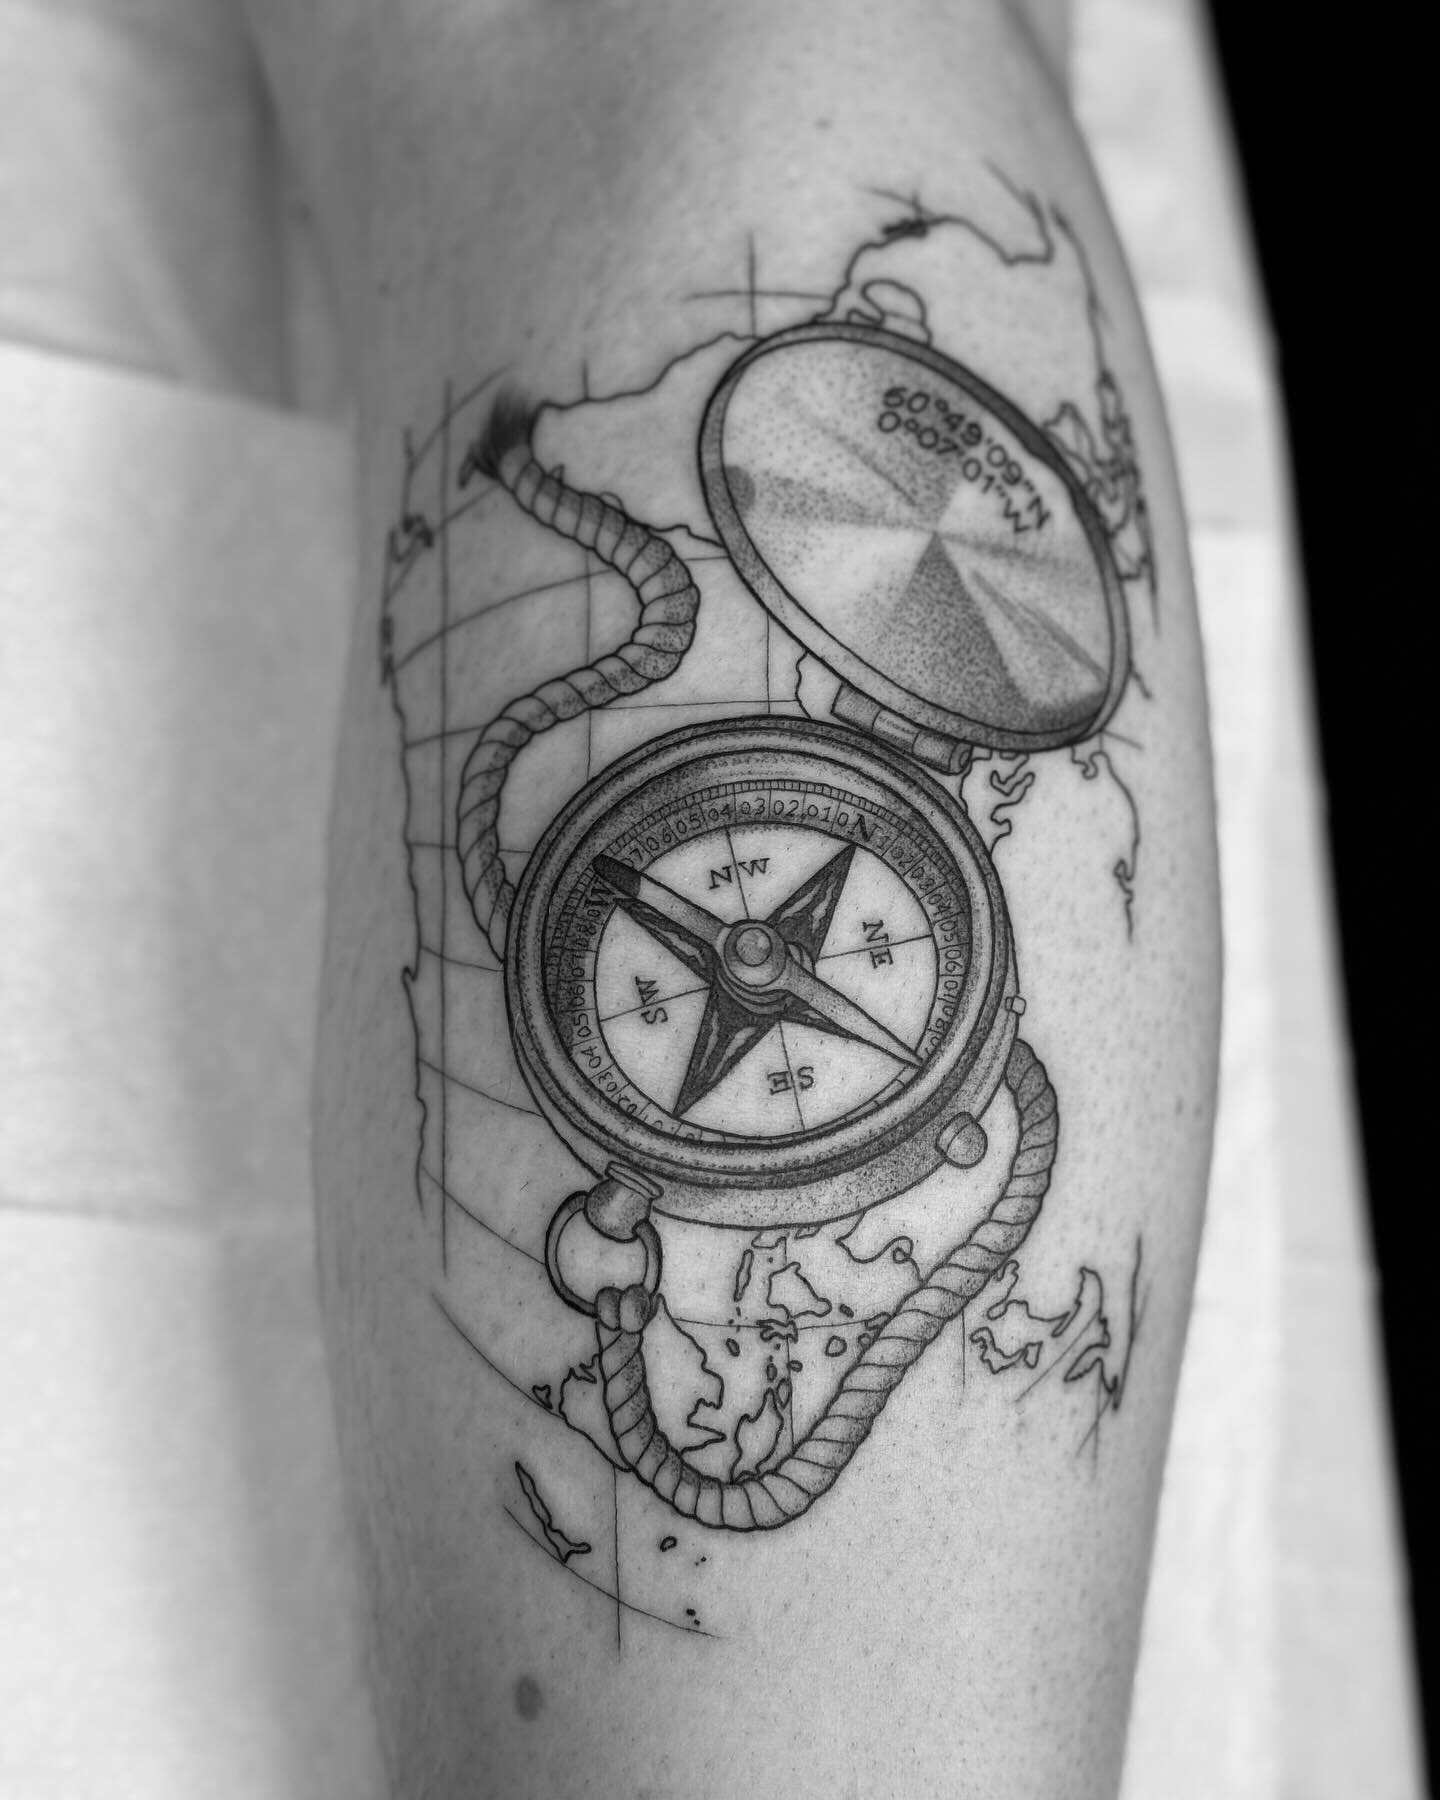 Compass piece I did for @whitxhousx a few weeks ago! 
.
.
.
#tattoo #tattooart #ink #inked #artist #tattooideas #compasstattoo #tattoodesign #blackwork #blackworktattoo